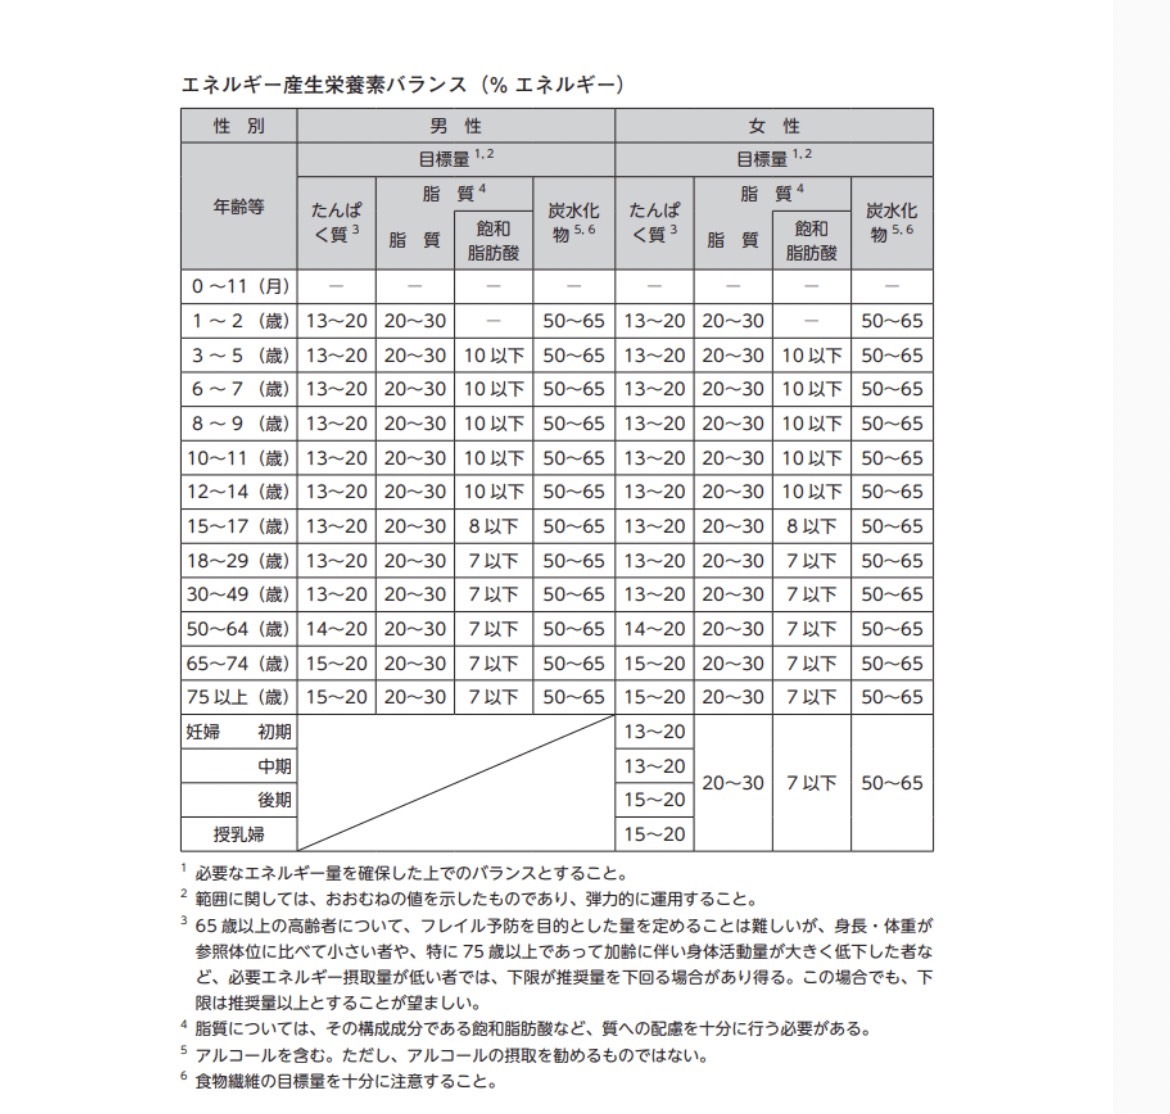 日本人の食事摂取基準（2020 年版）「日本人の食事摂取基準」策定検討会報告書